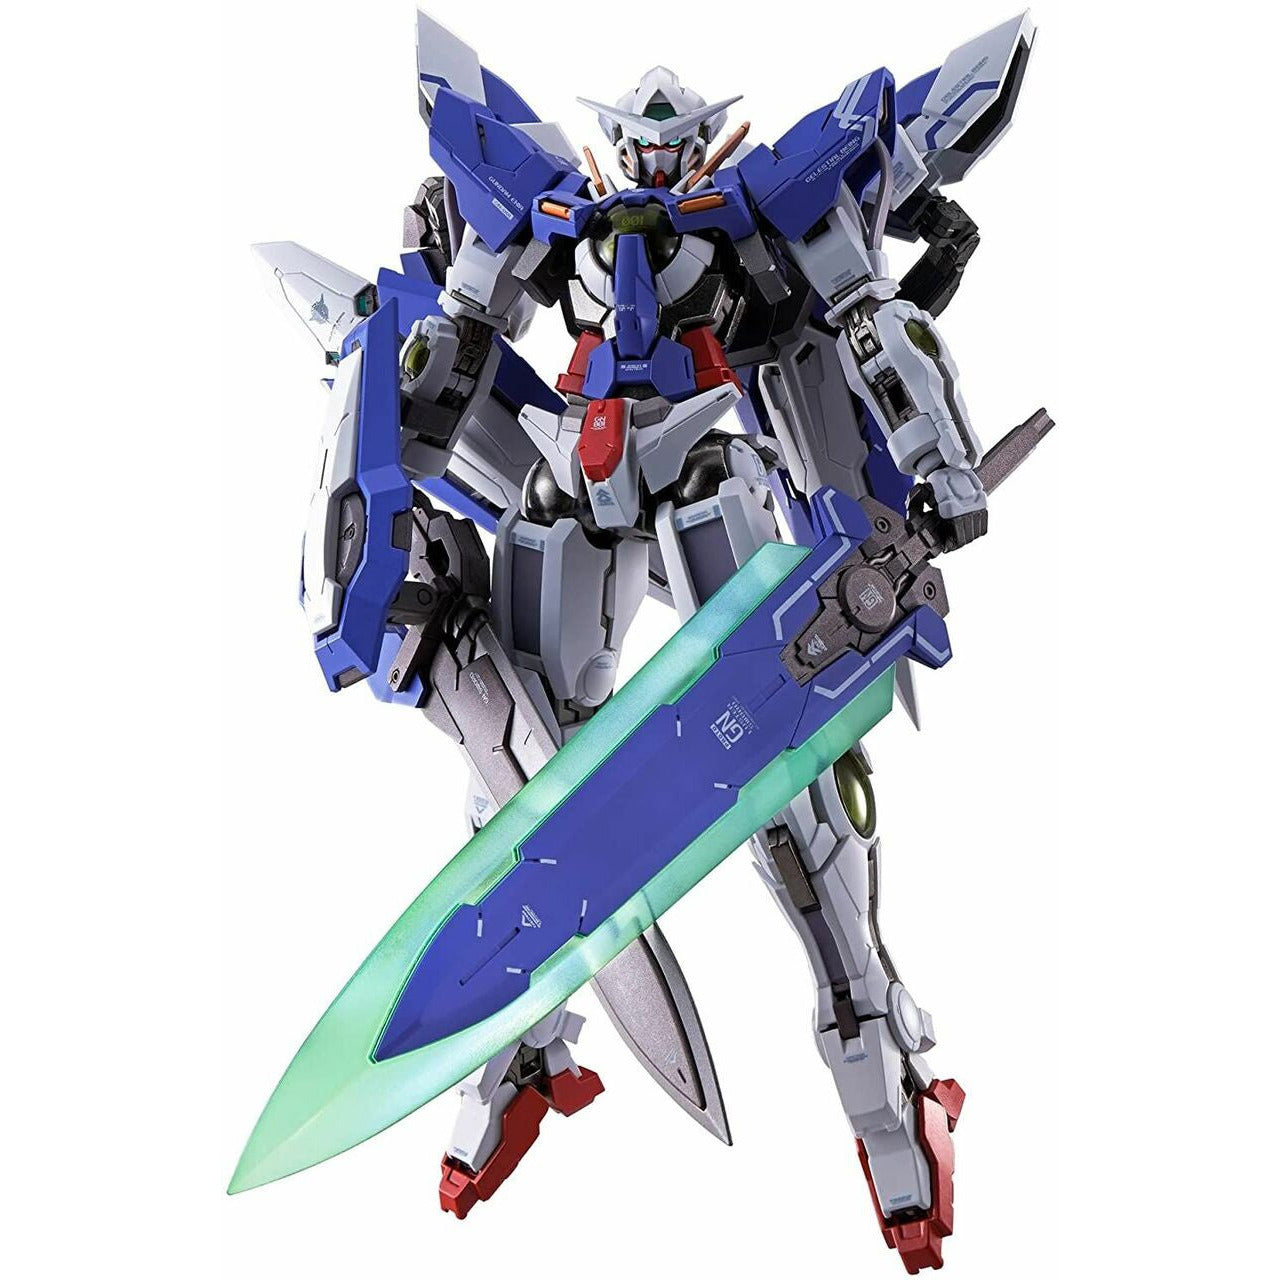 Metal Build 1/100 Gundam Devise Exia "Mobile Suit Gundam 00 Revealed Chronicle" #0063482 by Bandai